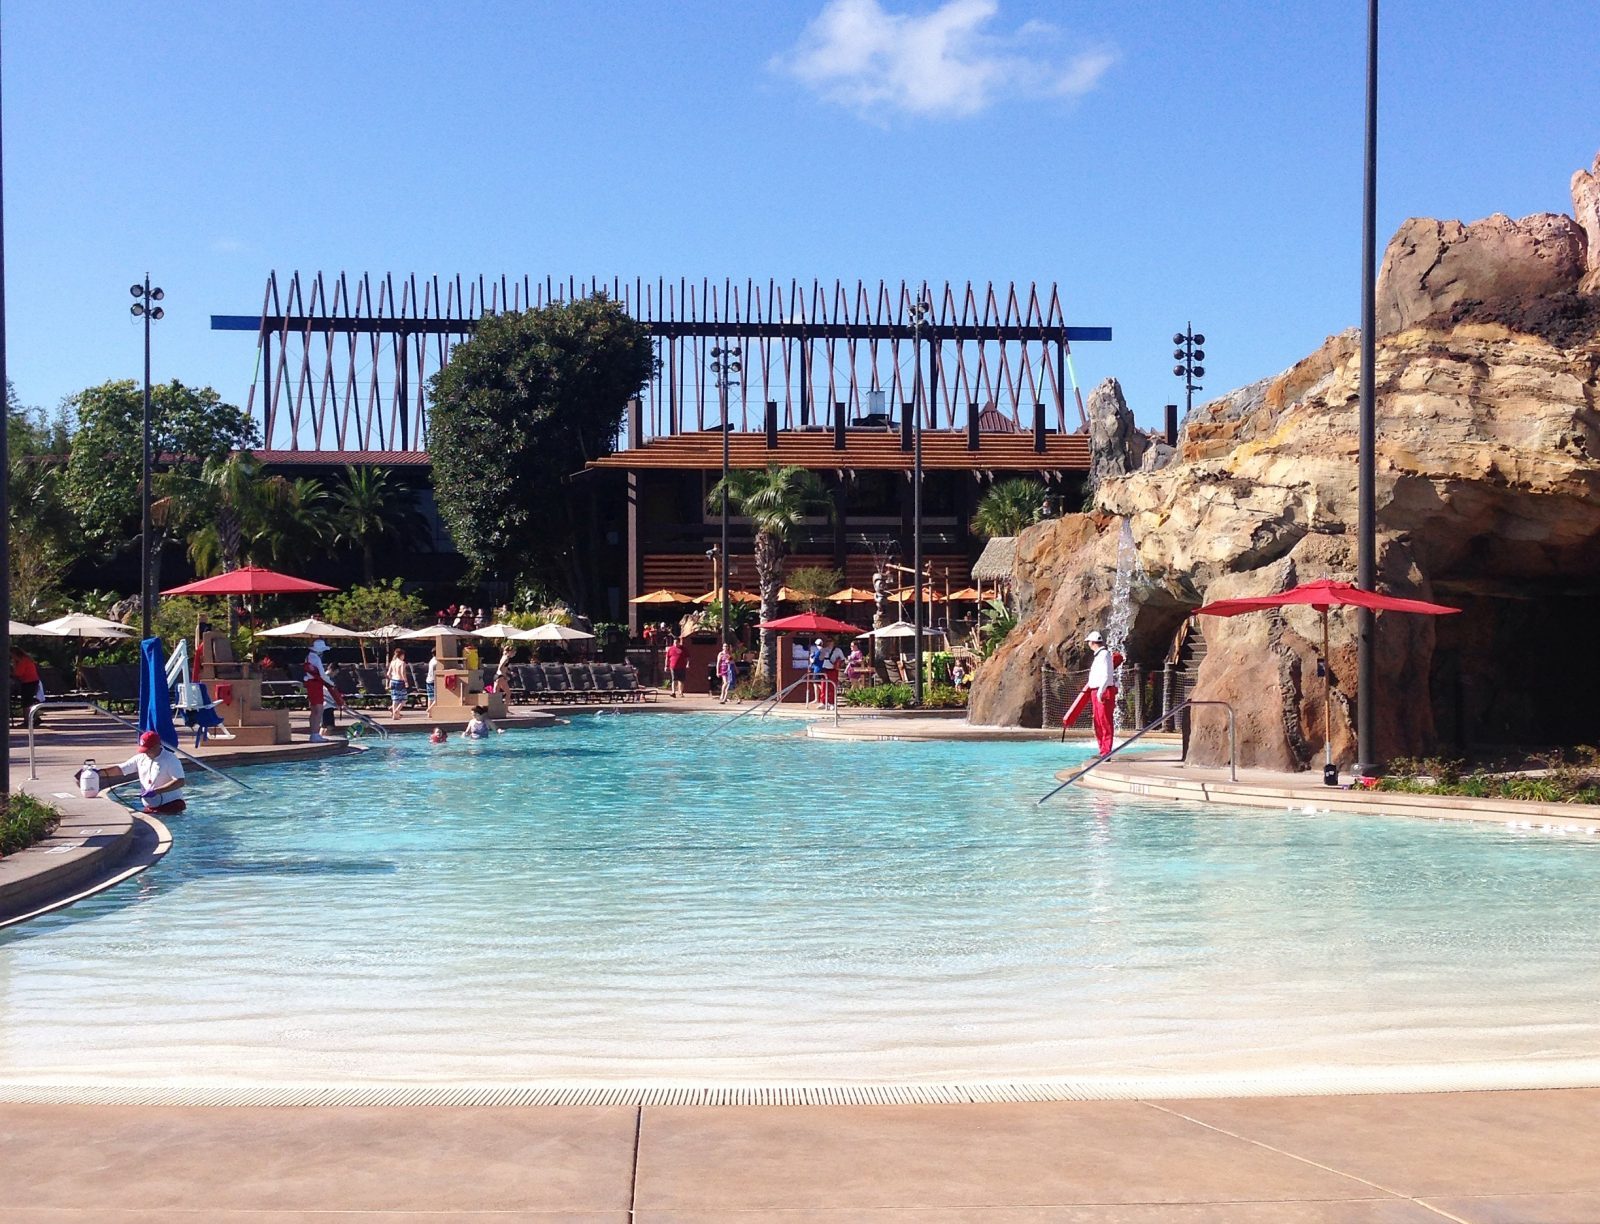 feature pool at Disney's Polynesian Village Resort